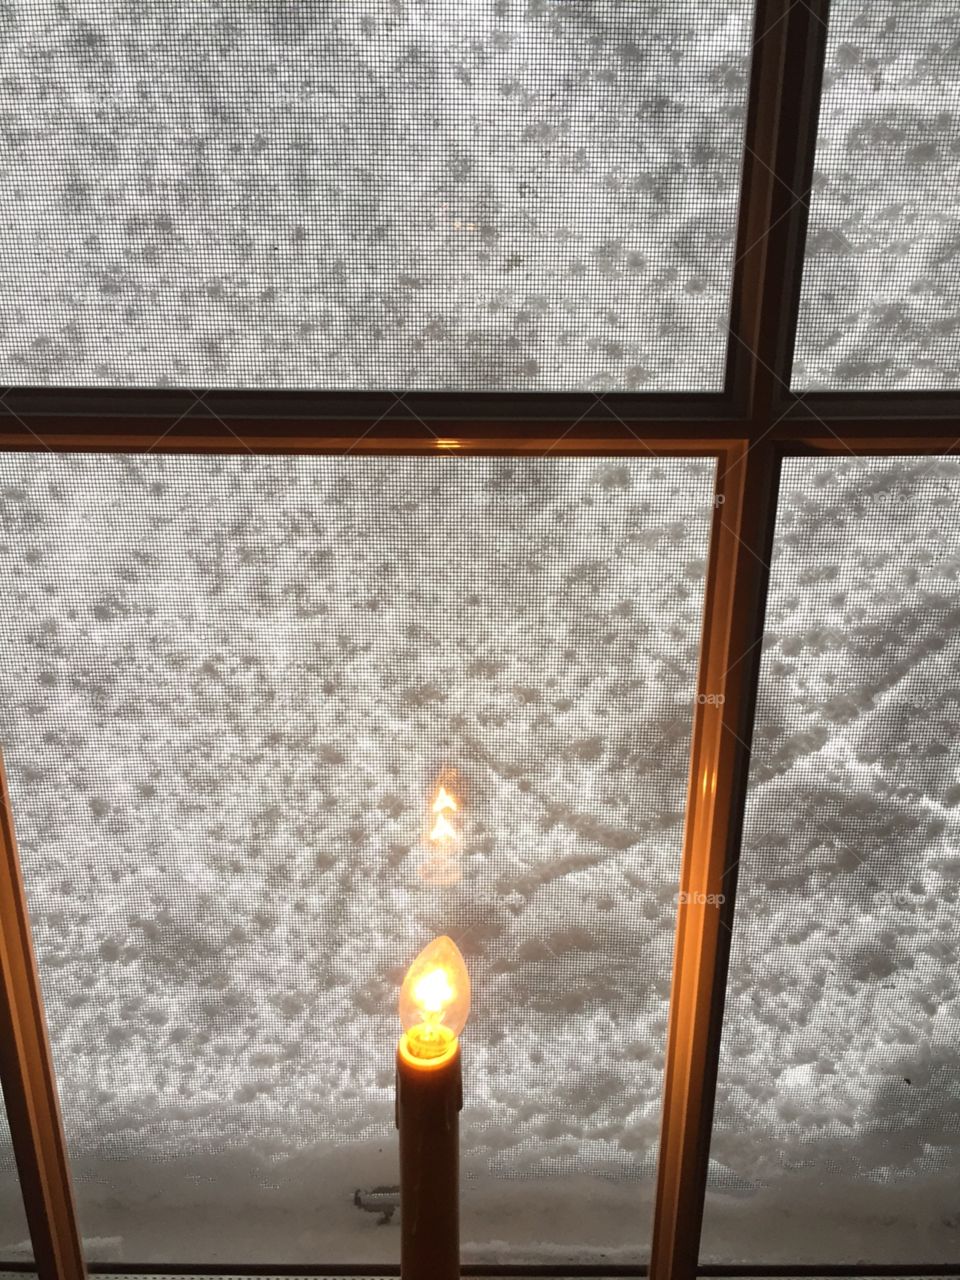 Snow window. Snow storm winter blizzard window candle 